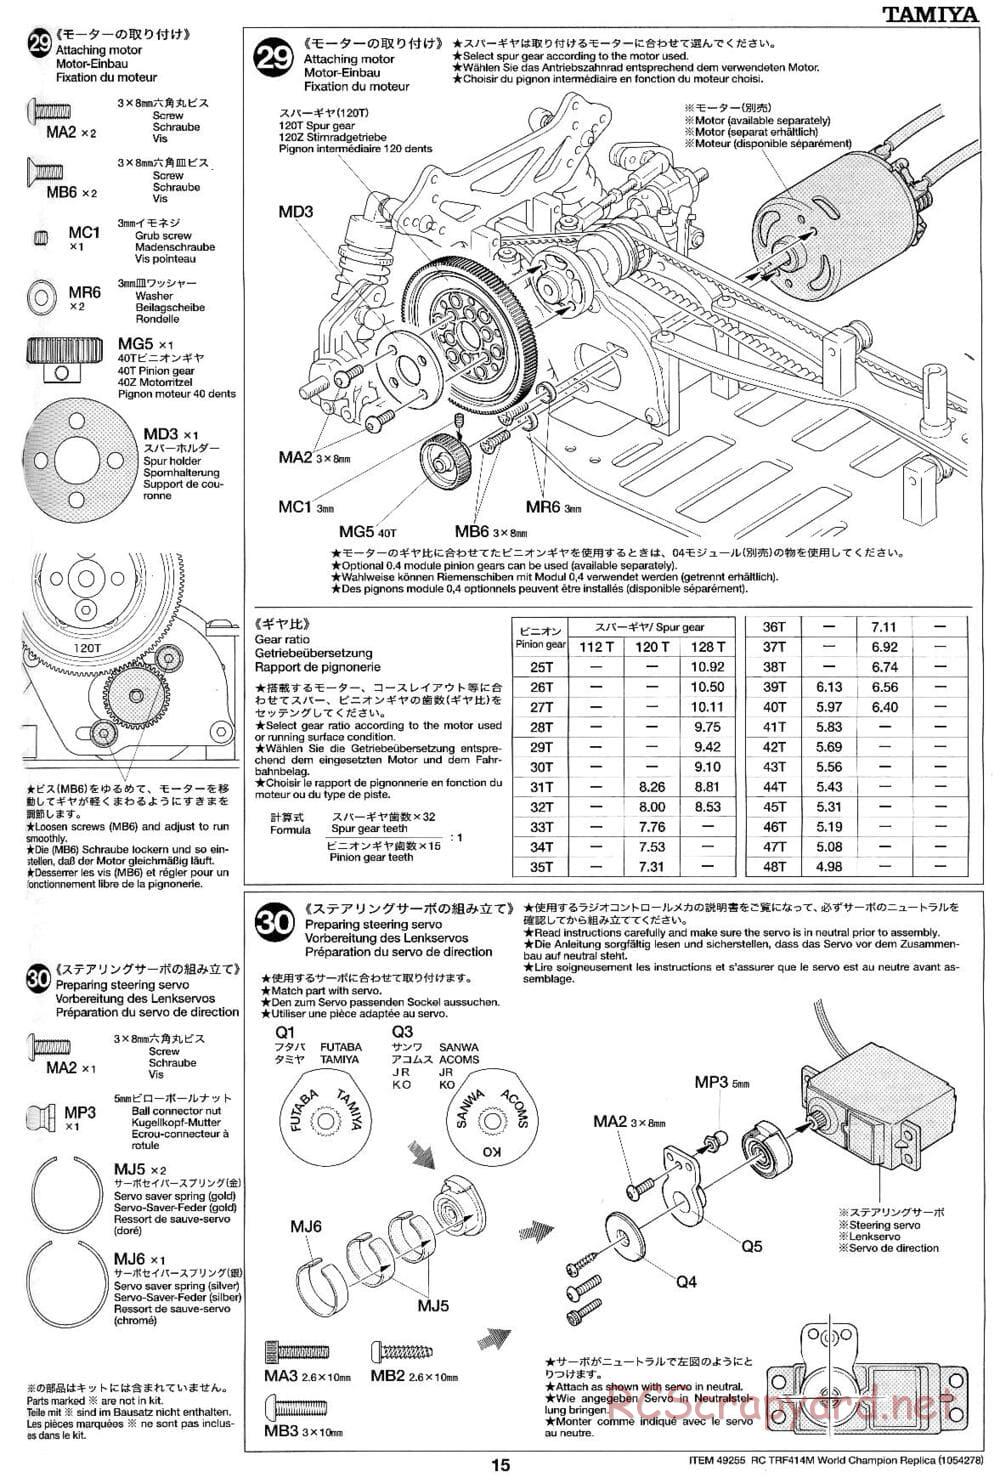 Tamiya - TRF414M World Champion Replica Chassis - Manual - Page 15